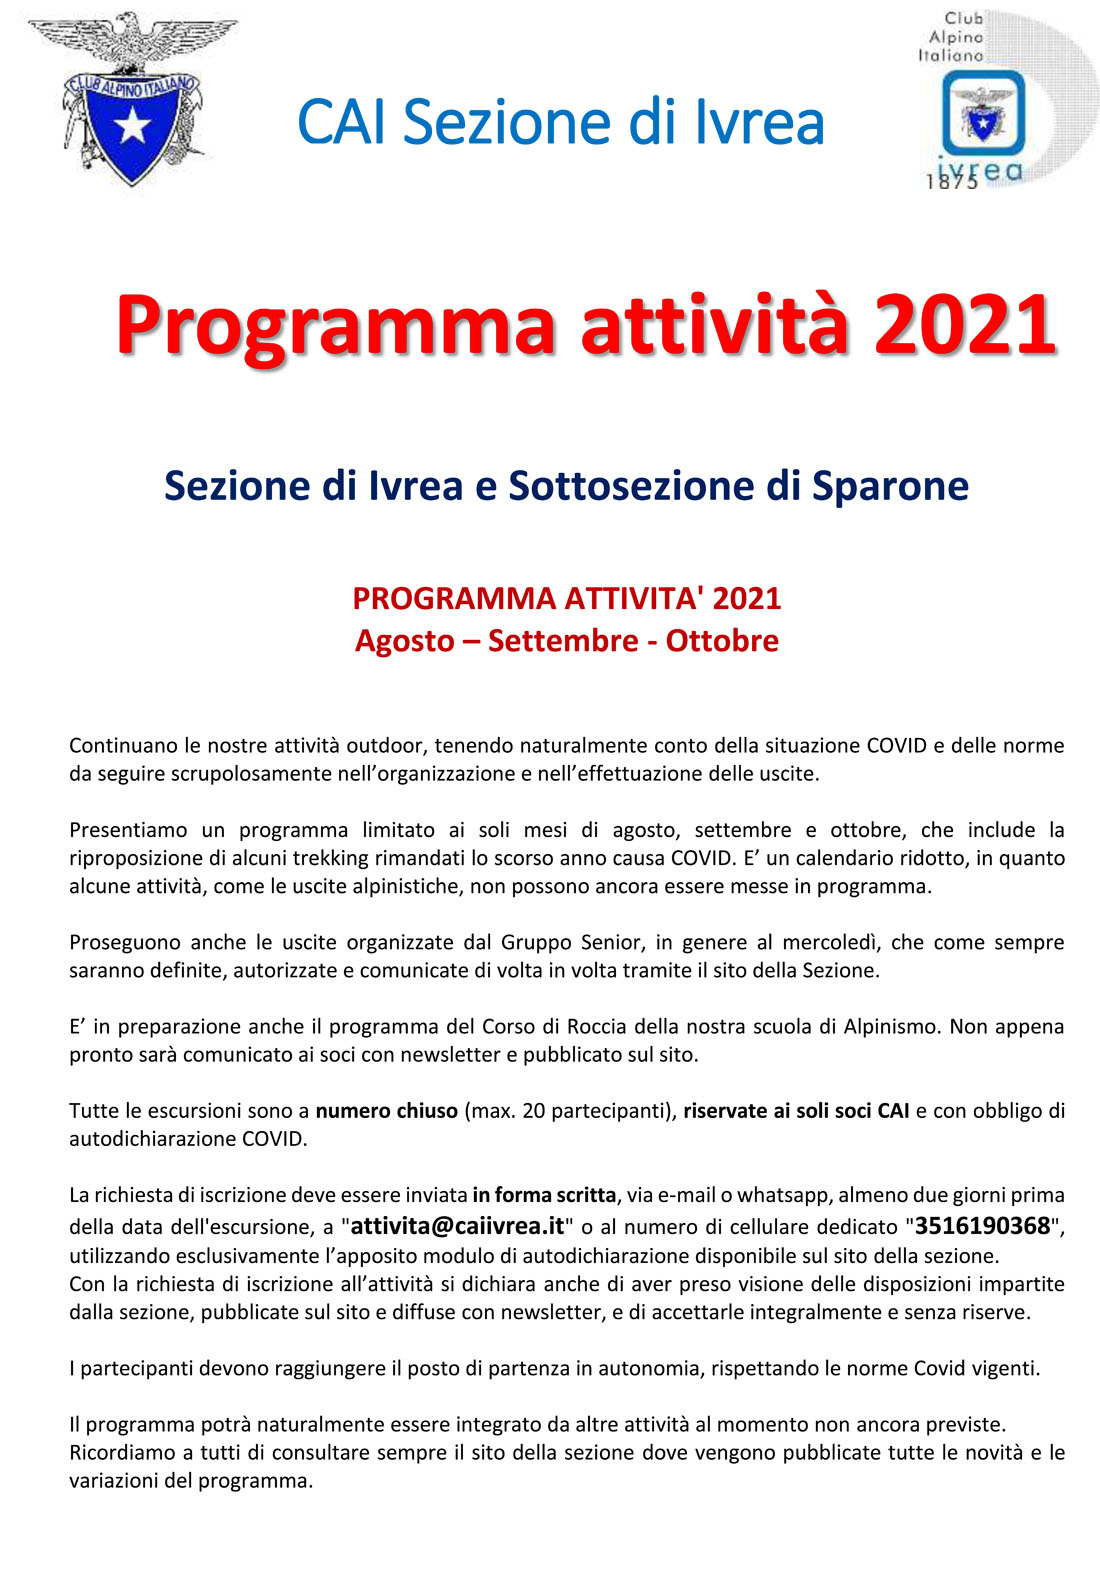 20210807_CAI_Ivrea_-Programma_2021_agosto_-_ottobre-1.jpg